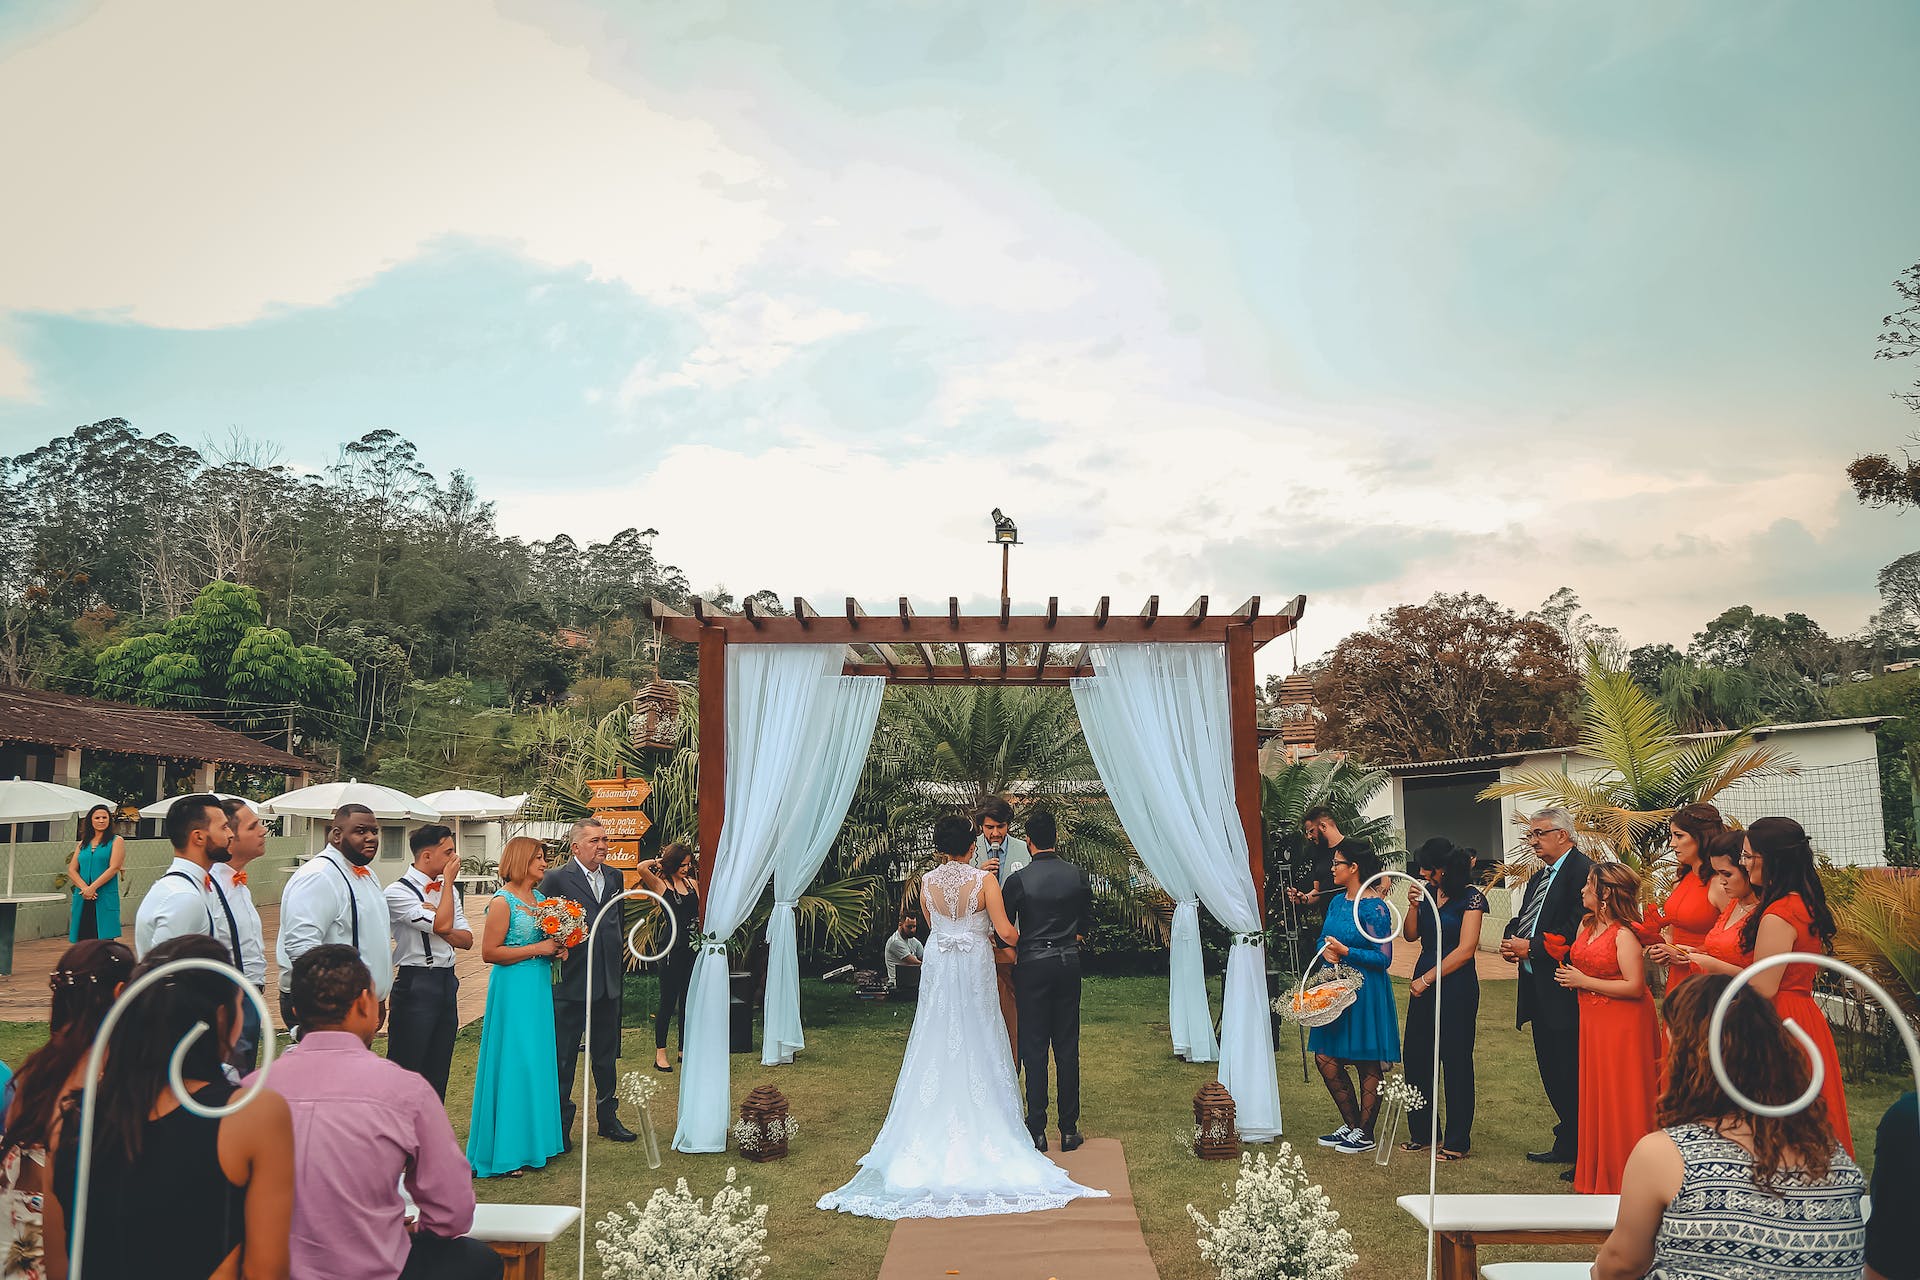 A wedding ceremony | Source: Pexels